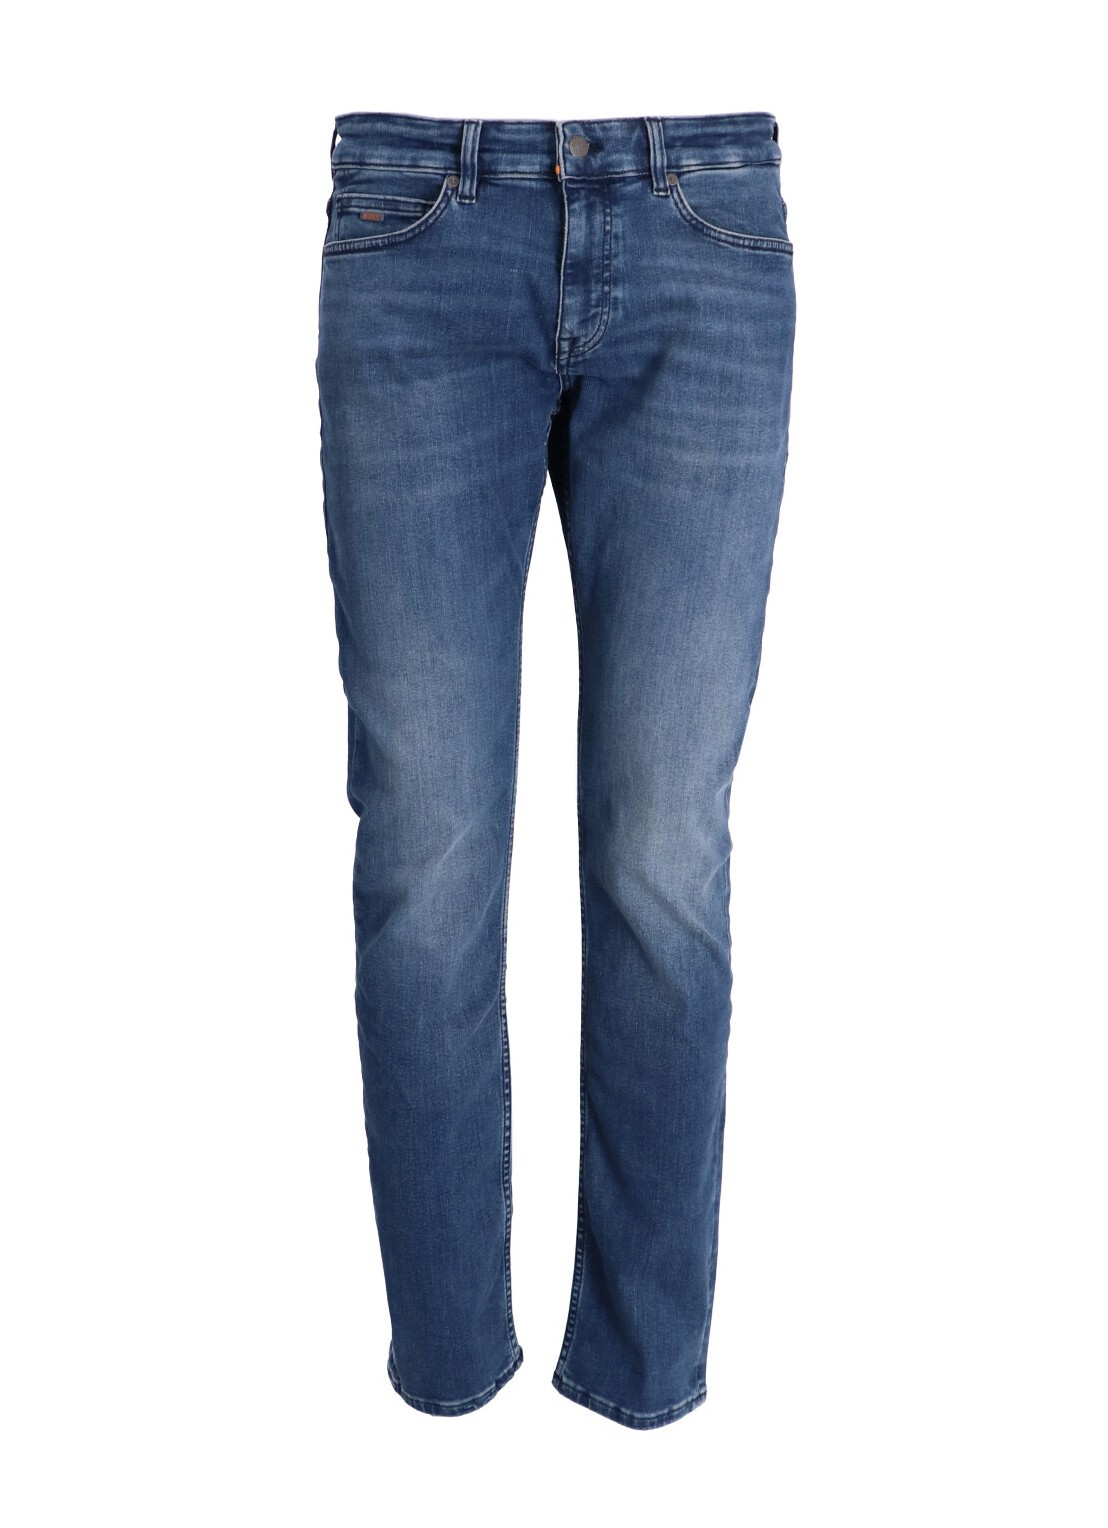 Pantalon jeans boss denim man delaware bc-p 50506706 431 talla 31
 